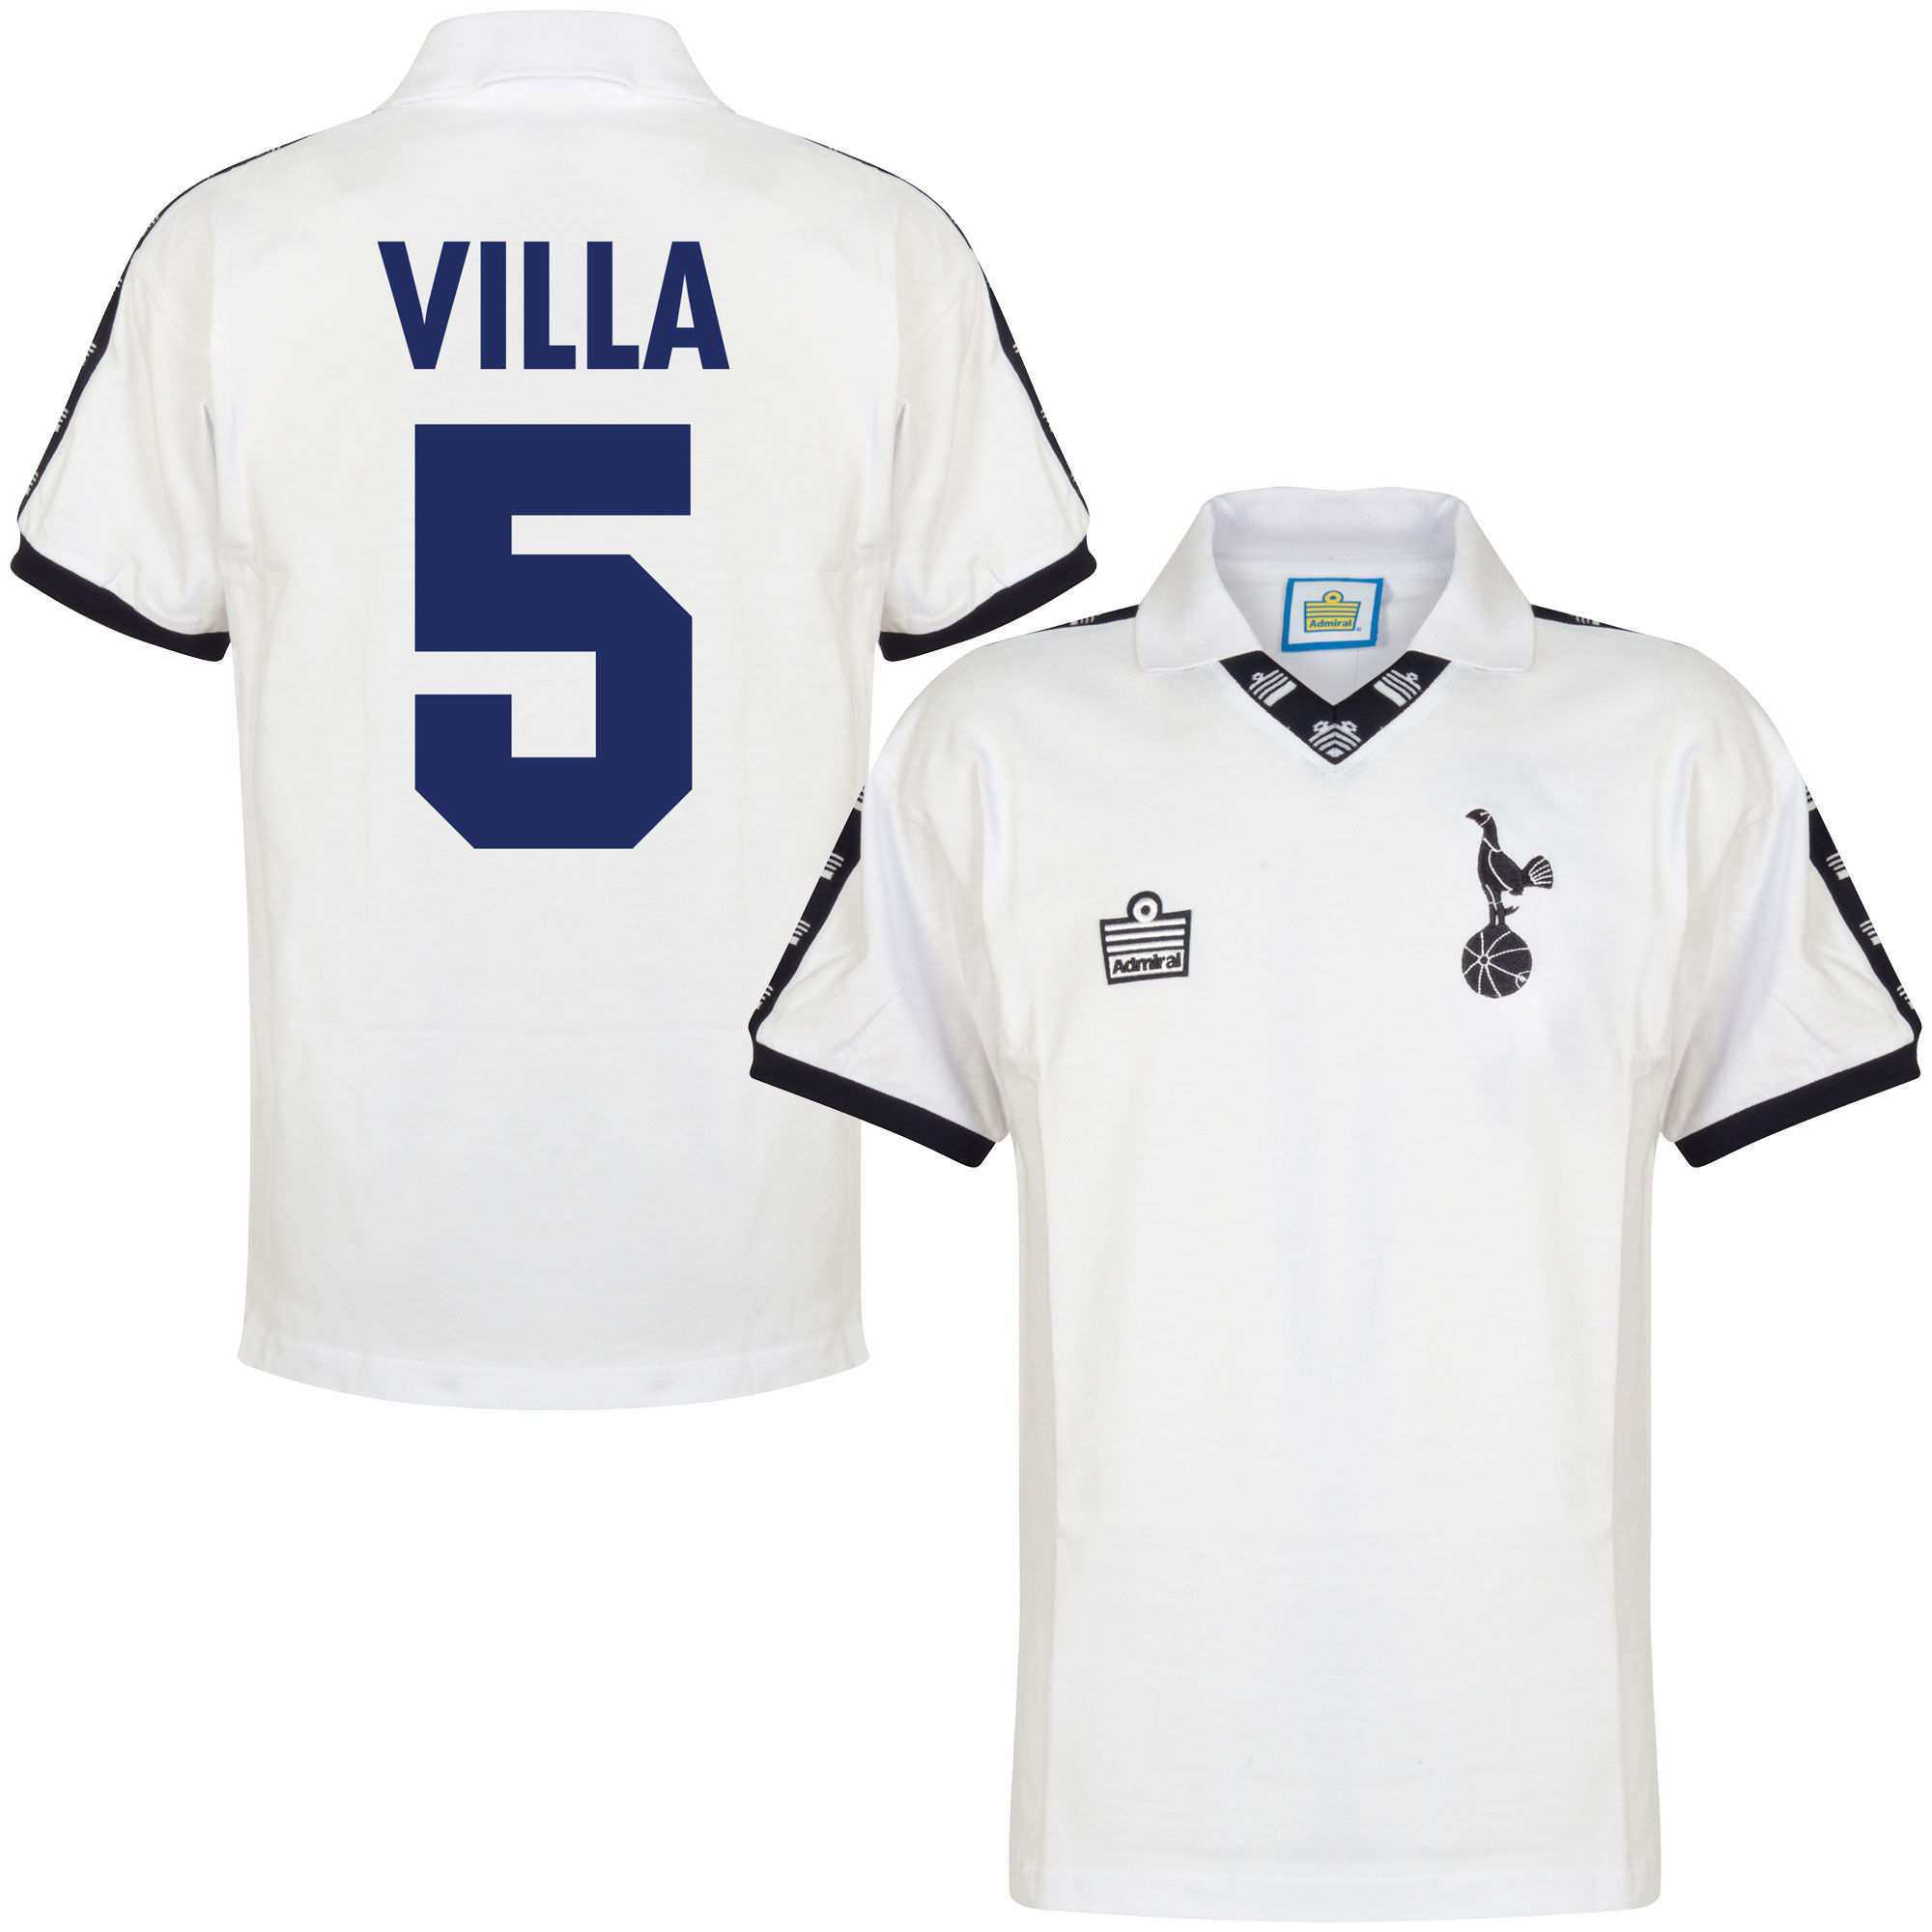 Tottenham Hotspur - Dres fotbalový - bílý, retrostyl, Ricardo Villa, sezóna 1977/78, domácí, číslo 5